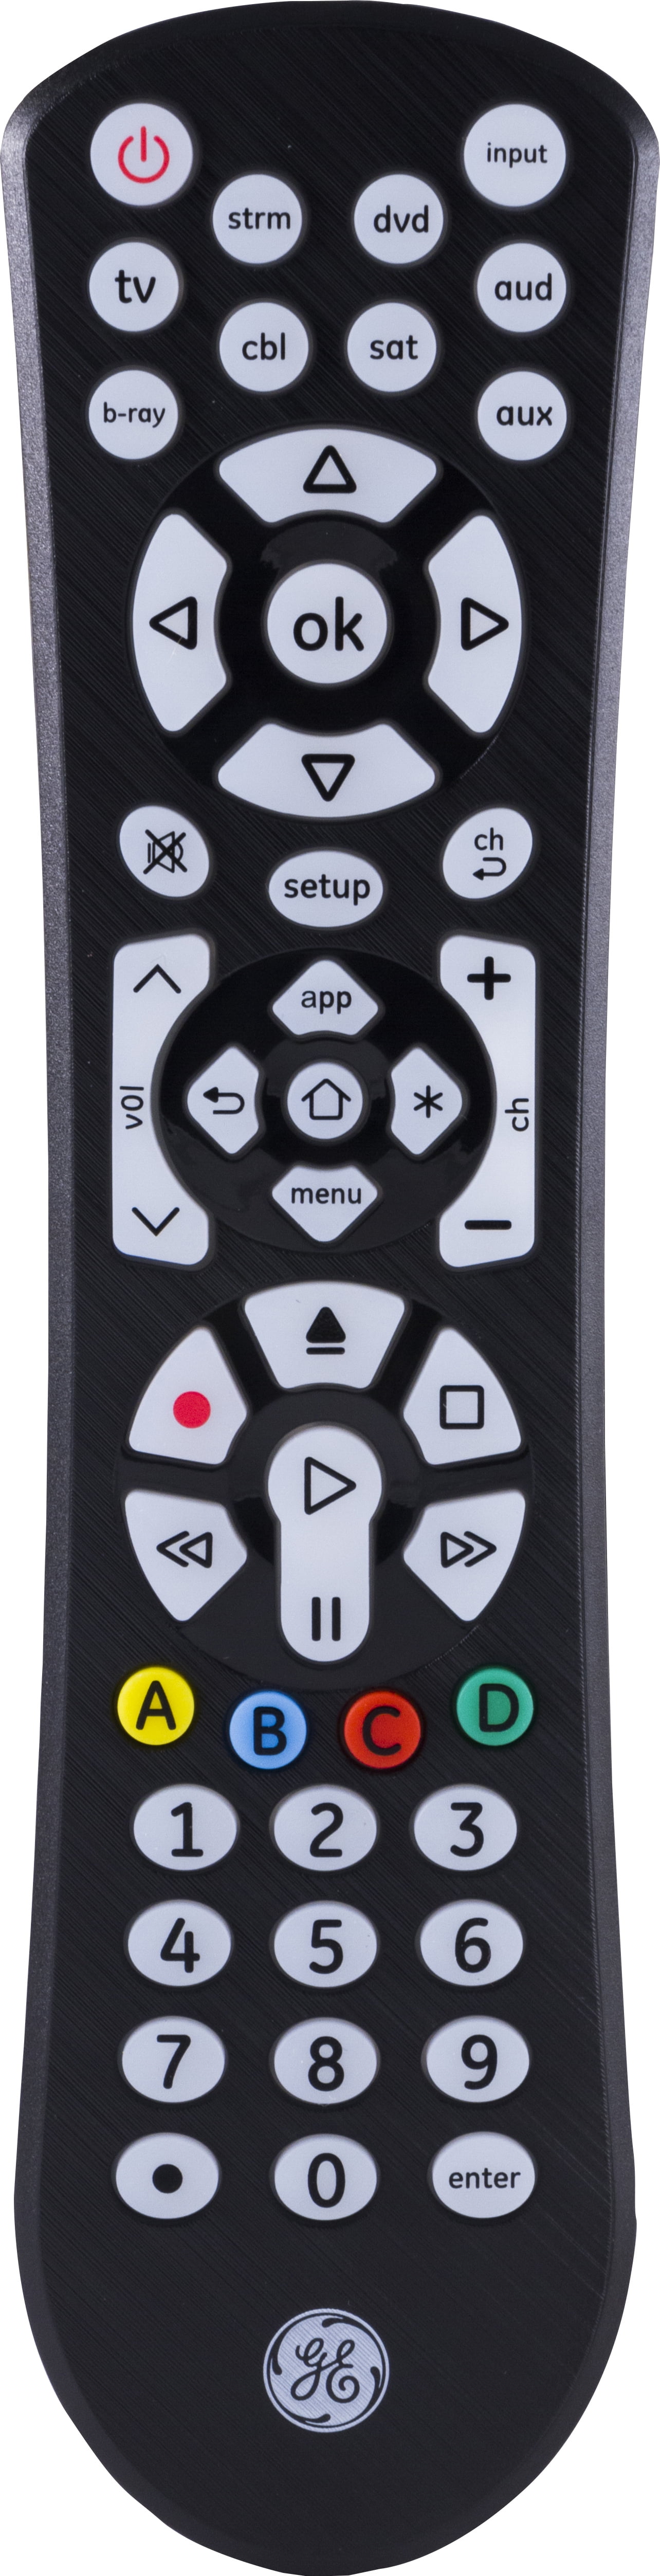 GE 8-Device Backlit Universal TV Remote Control in Black, 41567